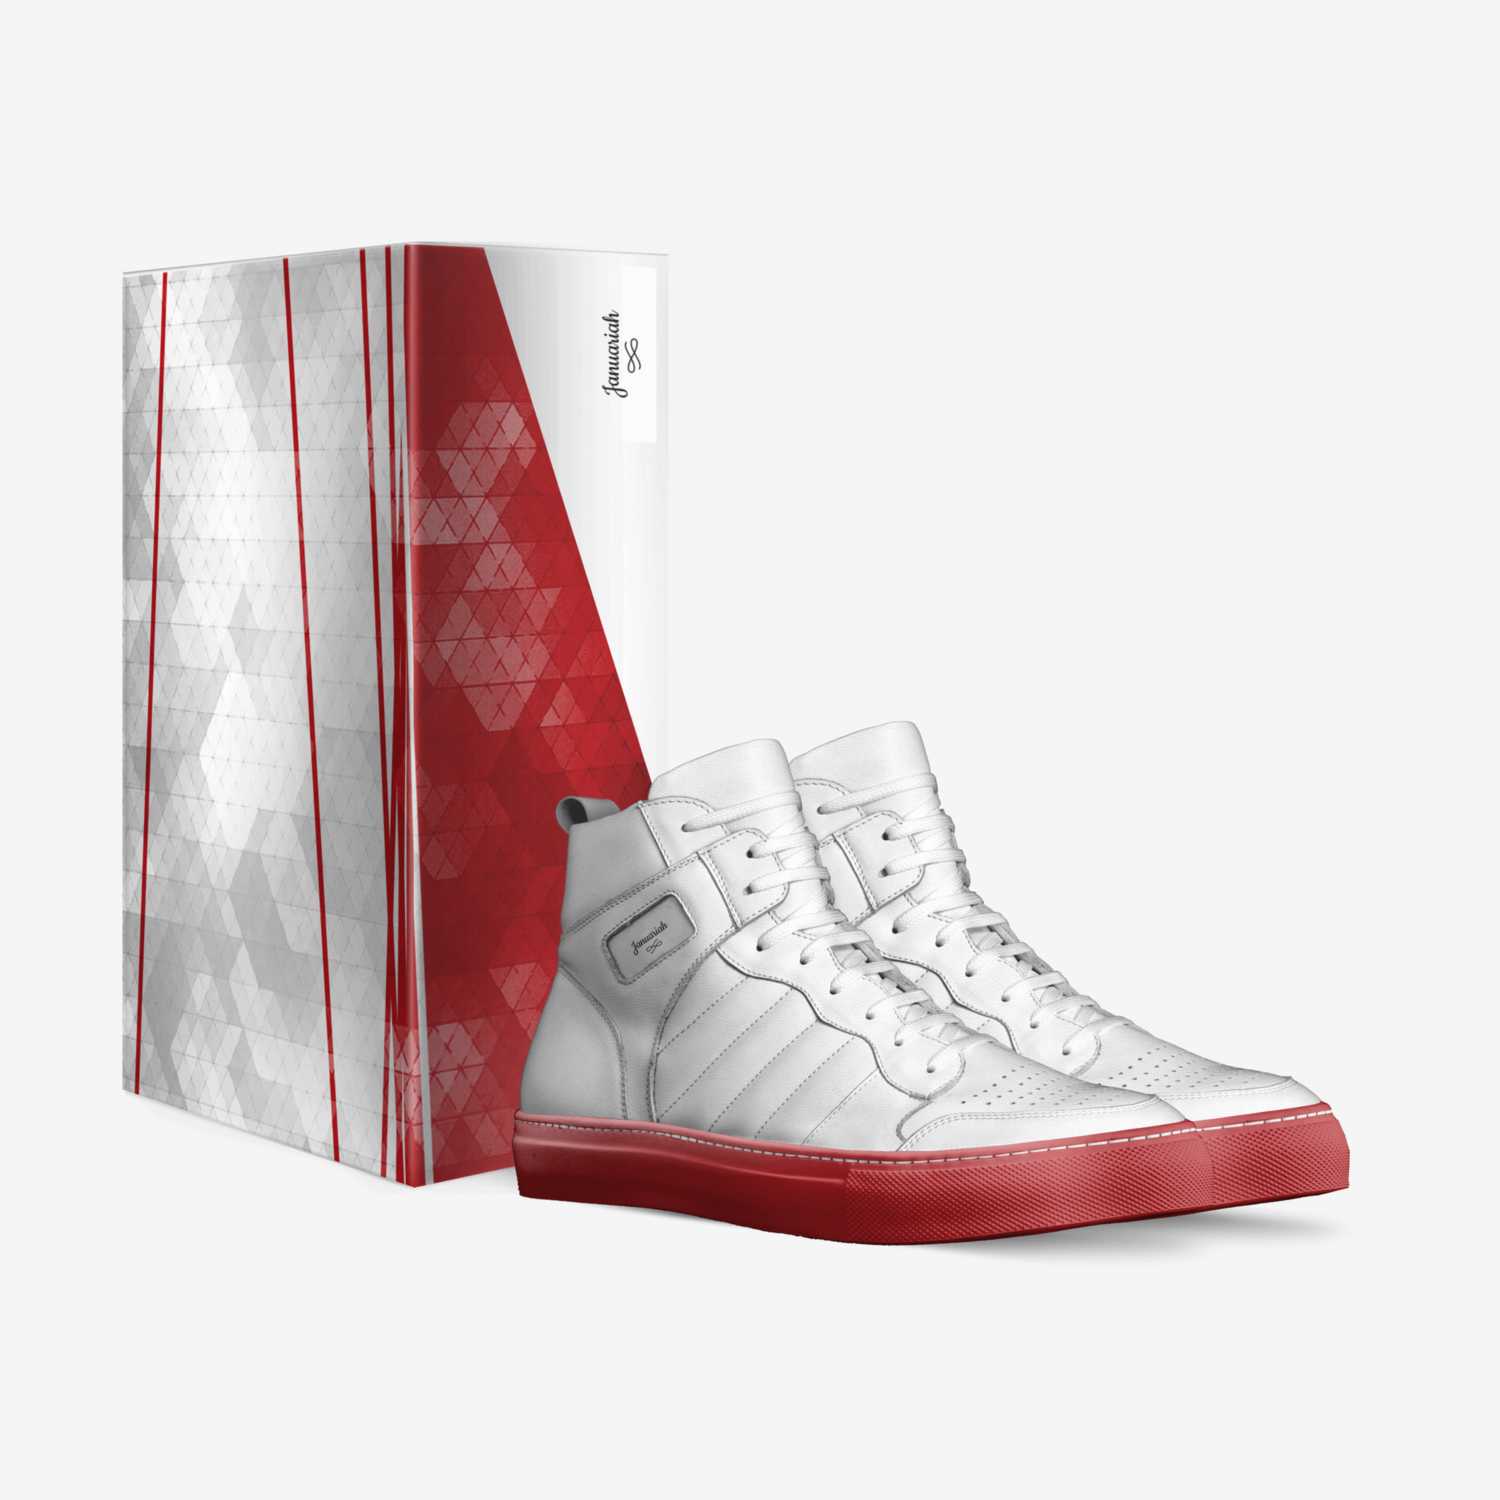 Januariah custom made in Italy shoes by Mya Kay | Box view